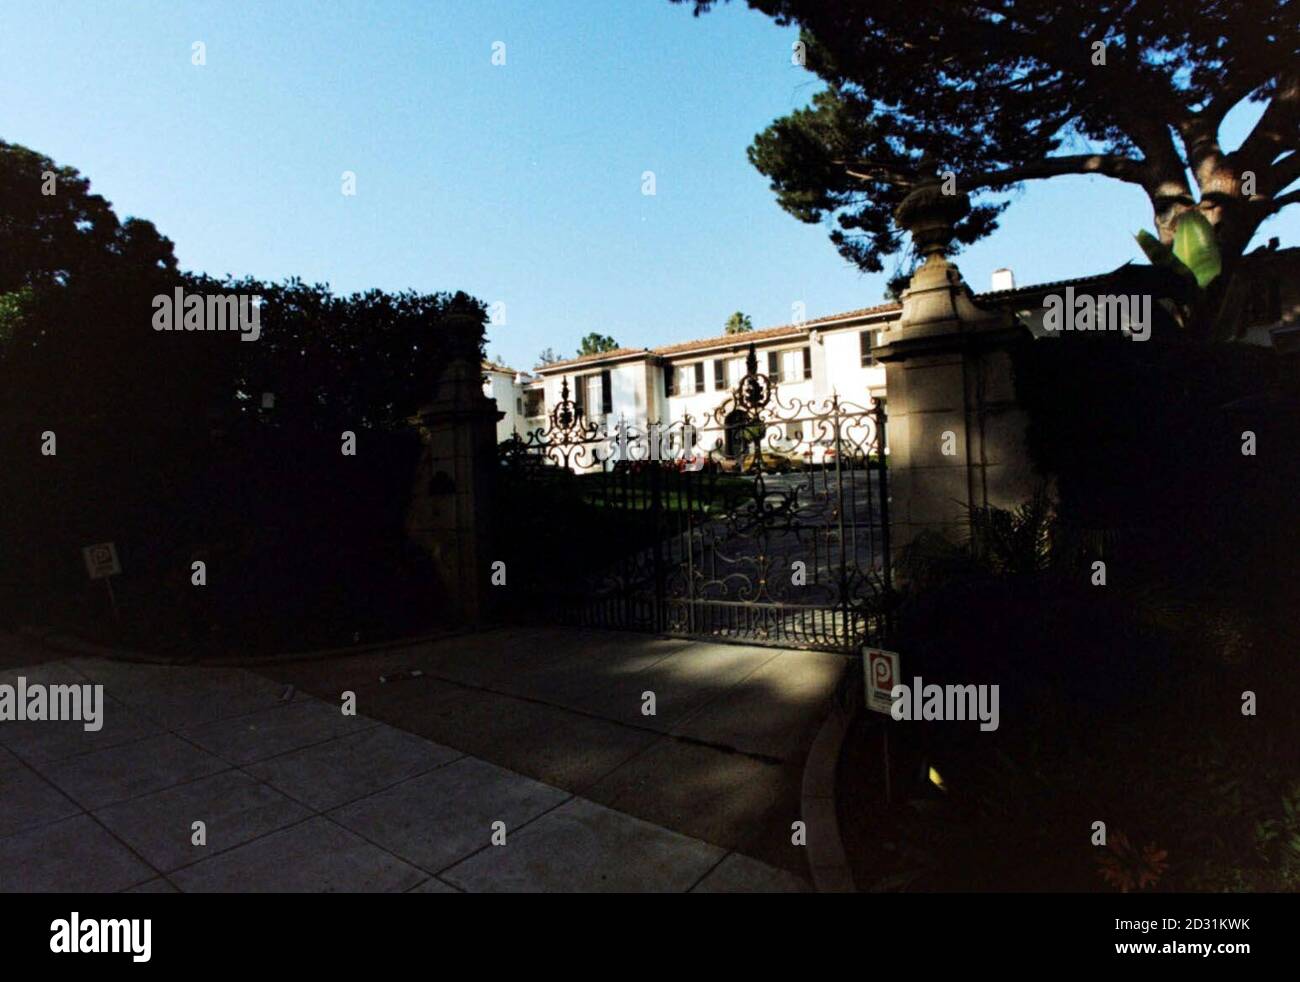 The Beverly Hills home of Michael Douglas and Catherine Zeta Jones. Stock Photo